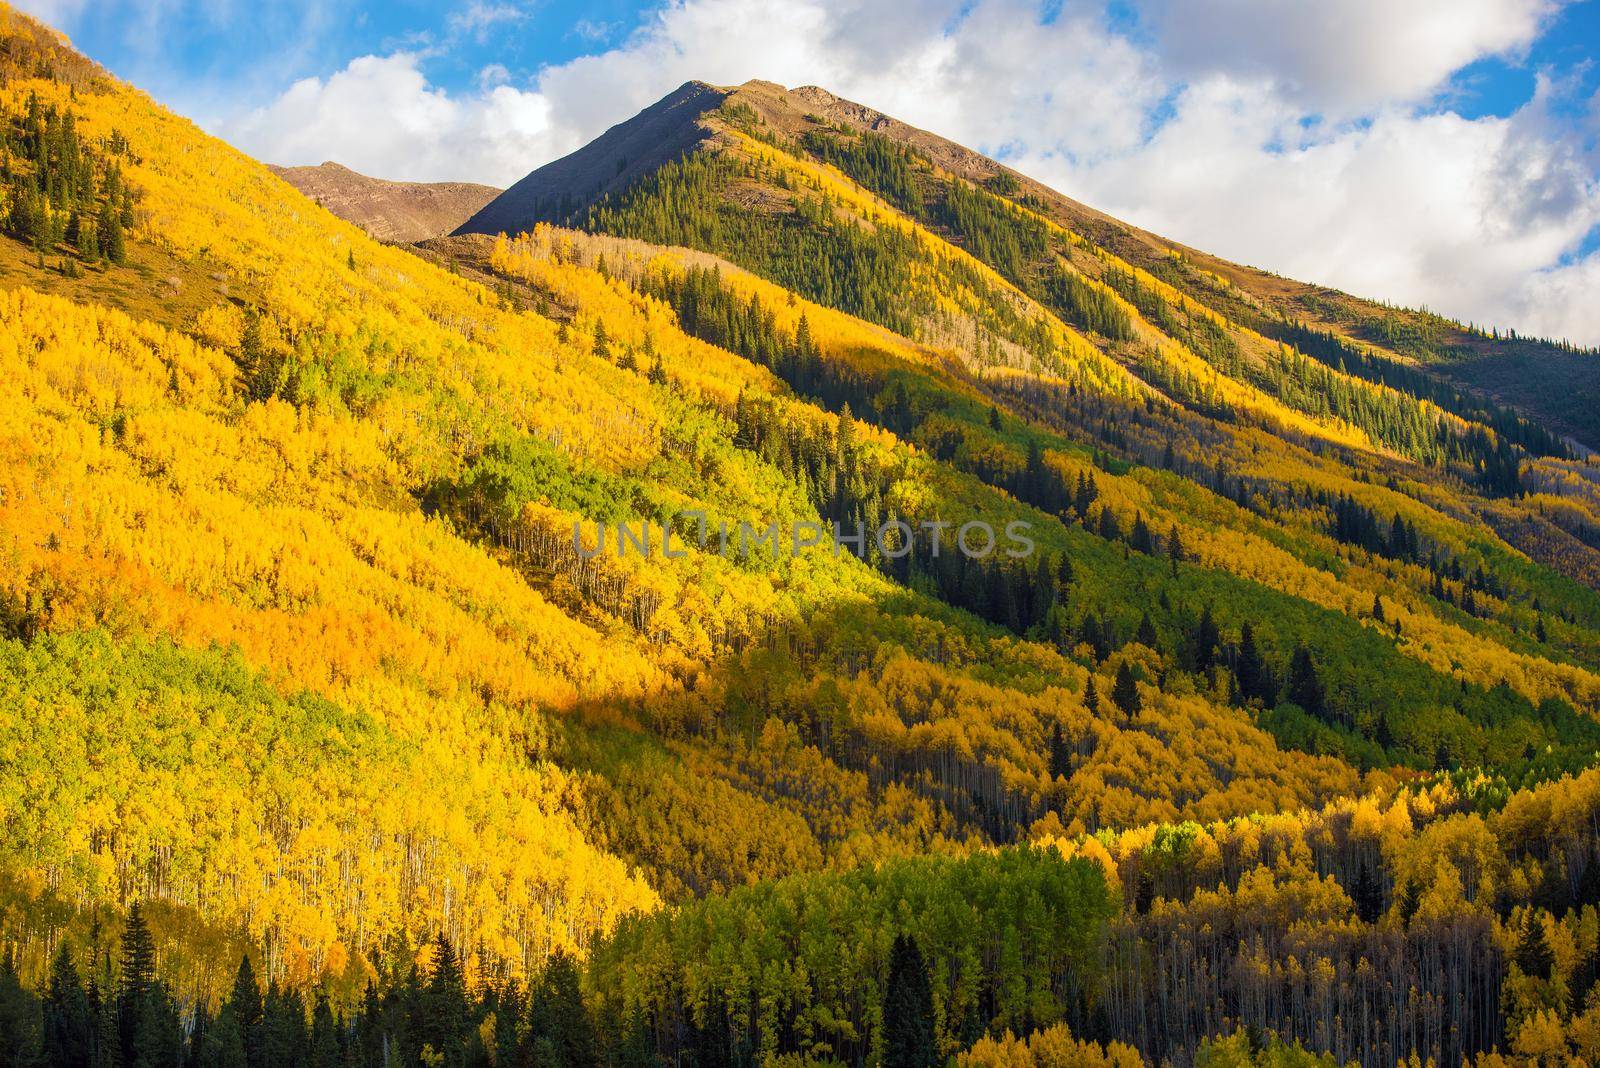 Fall Hills of Colorado. Yellow Aspen Trees Forest near Aspen, Colorado, USA by welcomia